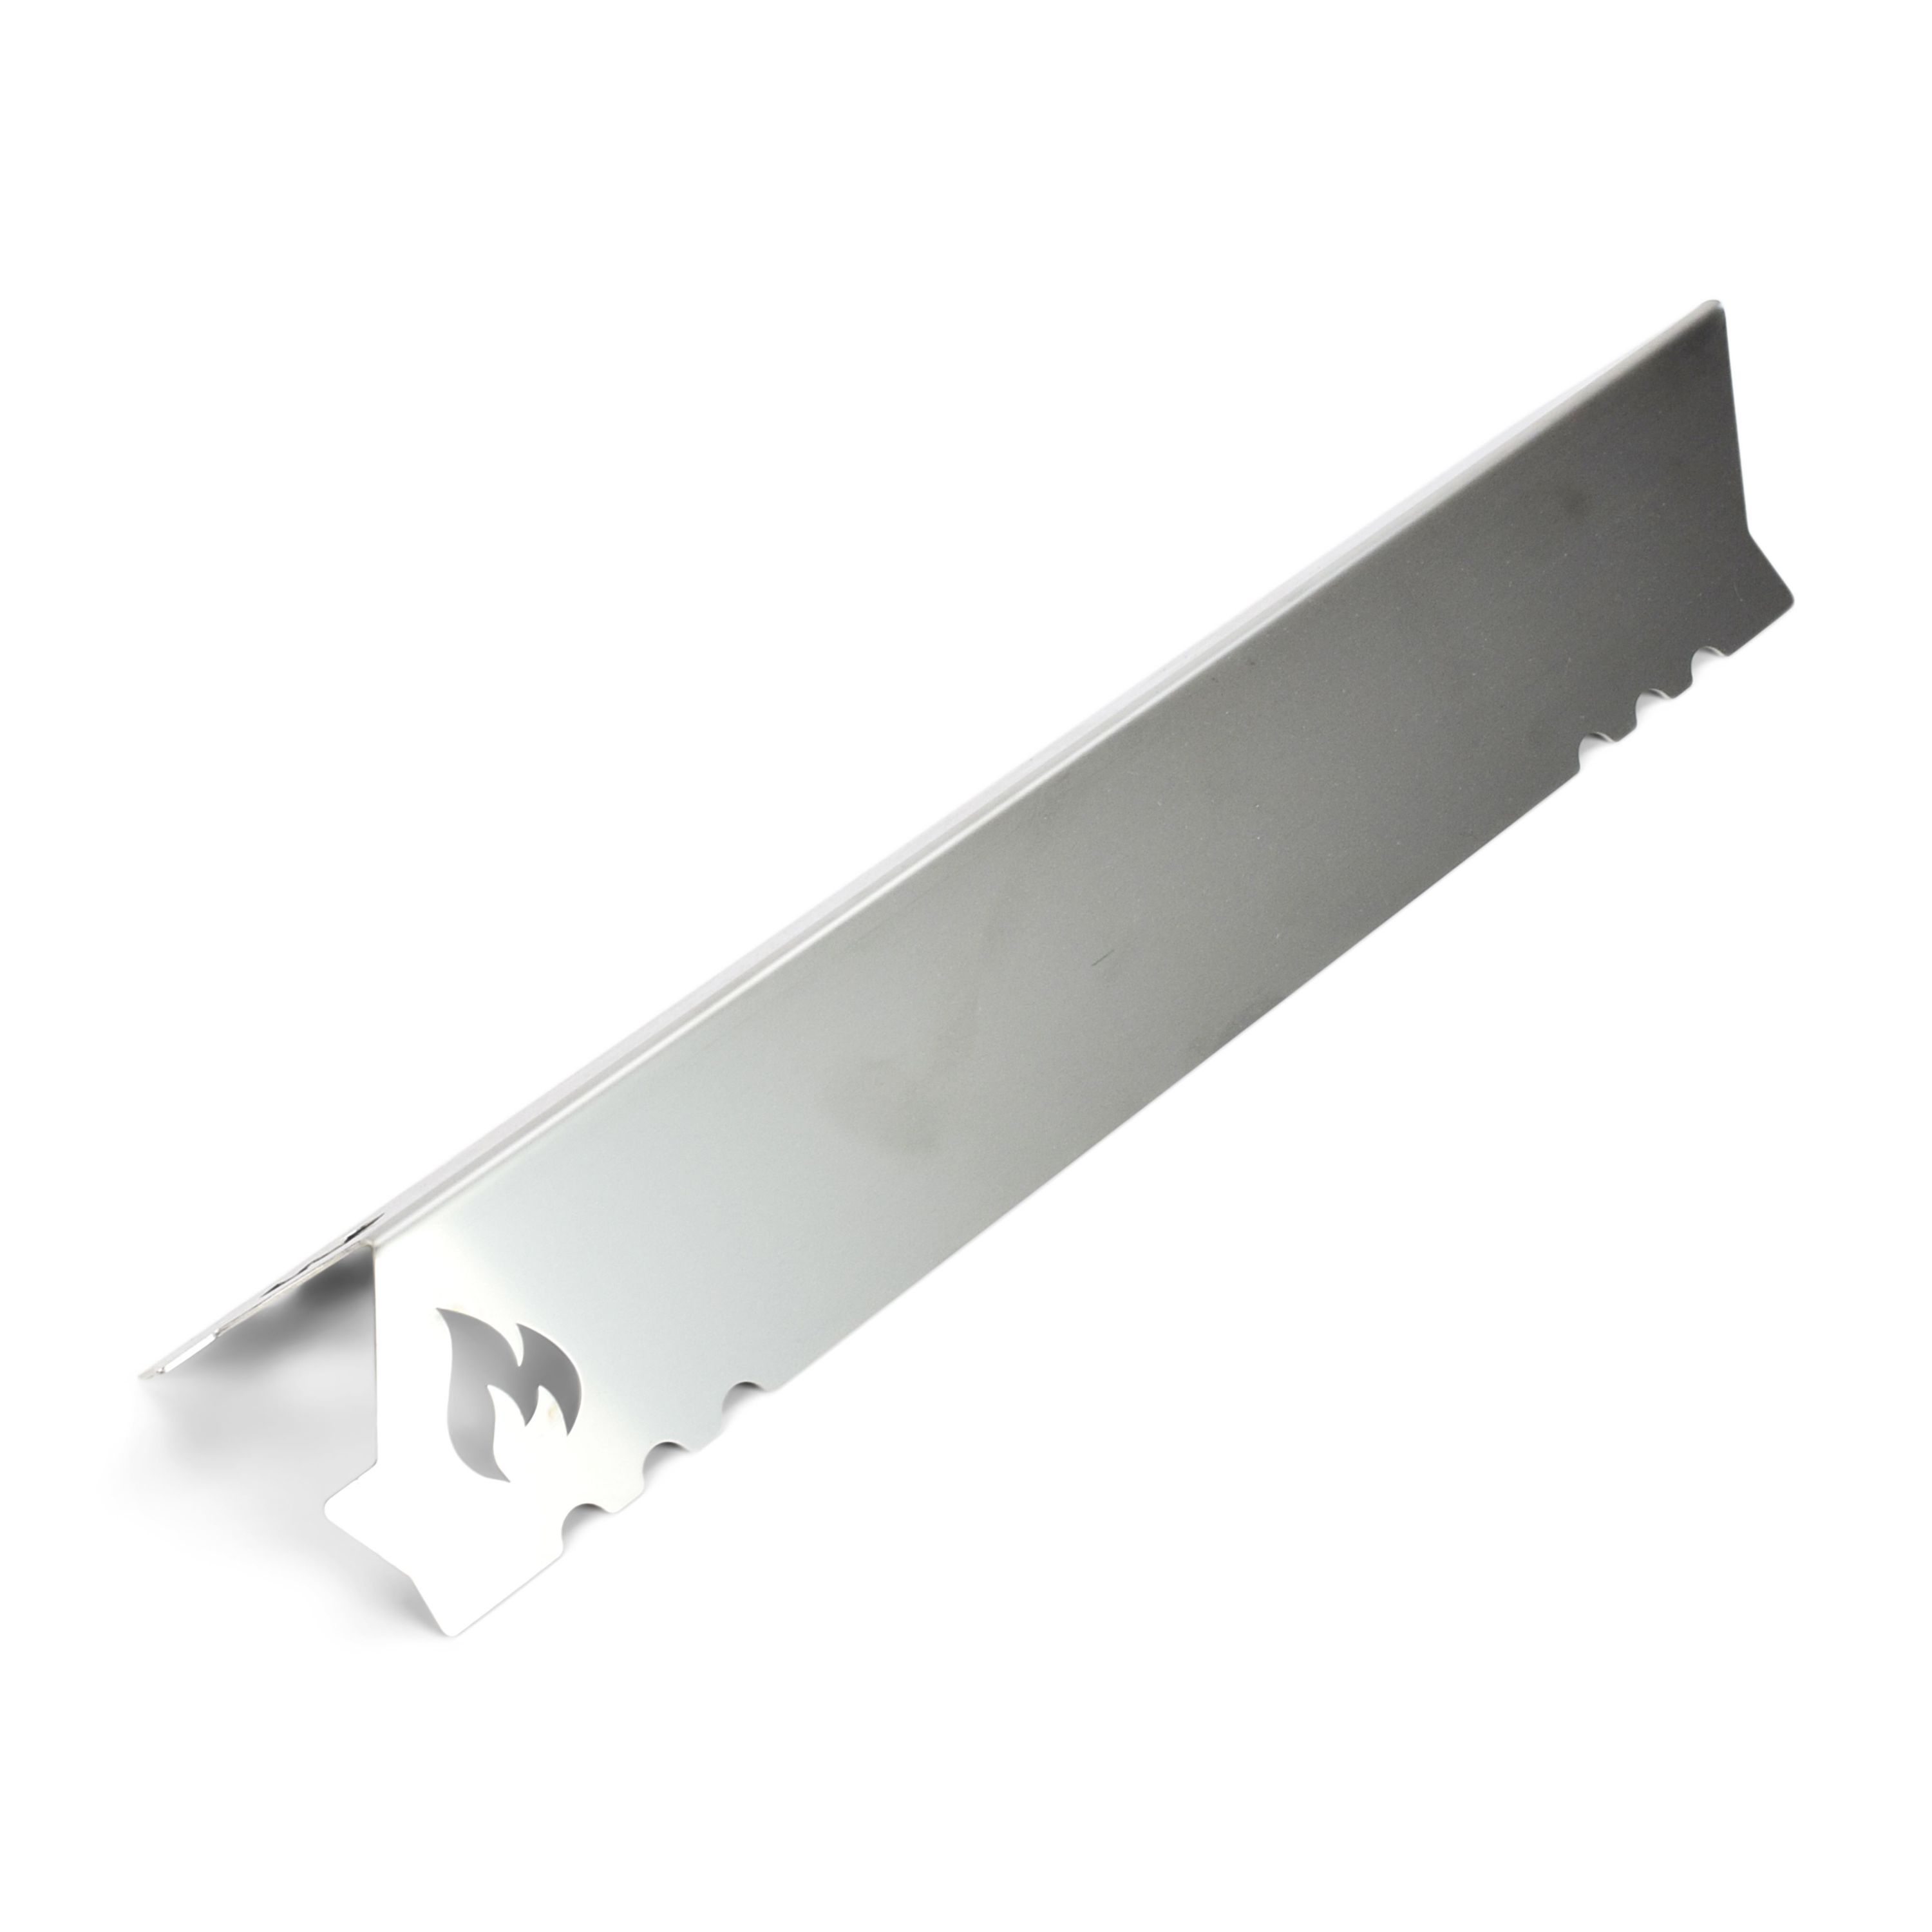 Stainless steel aroma rail for Rösle Burner cover for Videro G4-SL and G4-SK